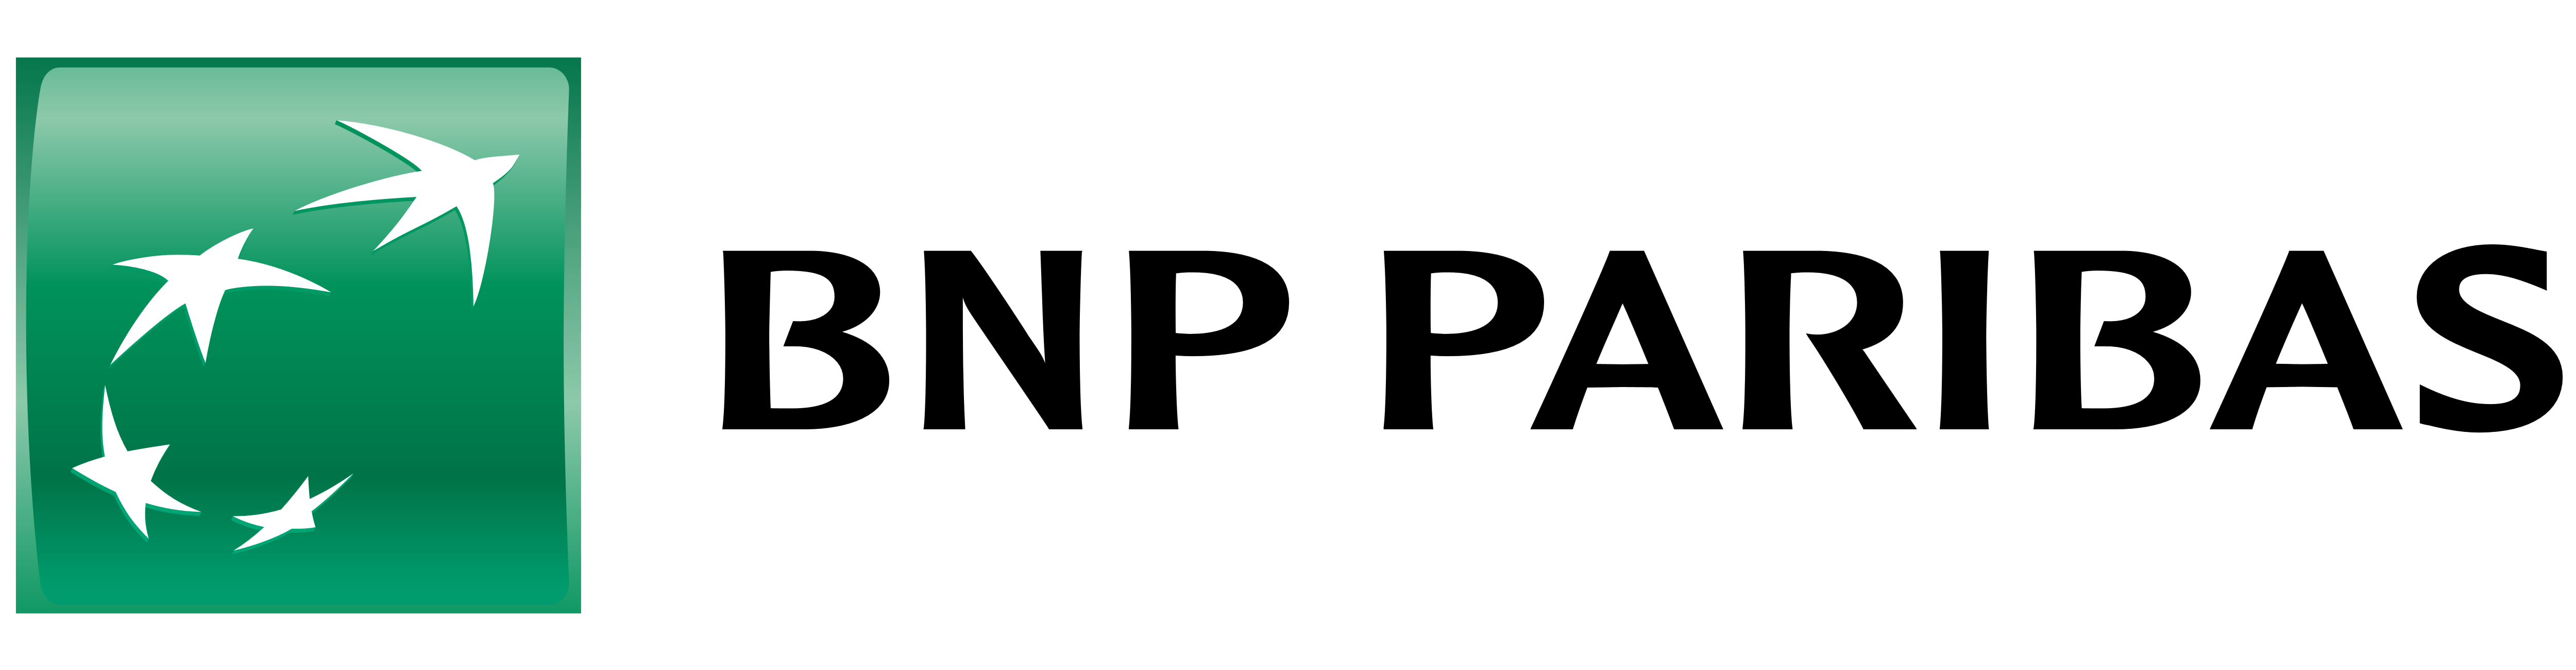 BNPP Logo - BNP Paribas – Logos Download